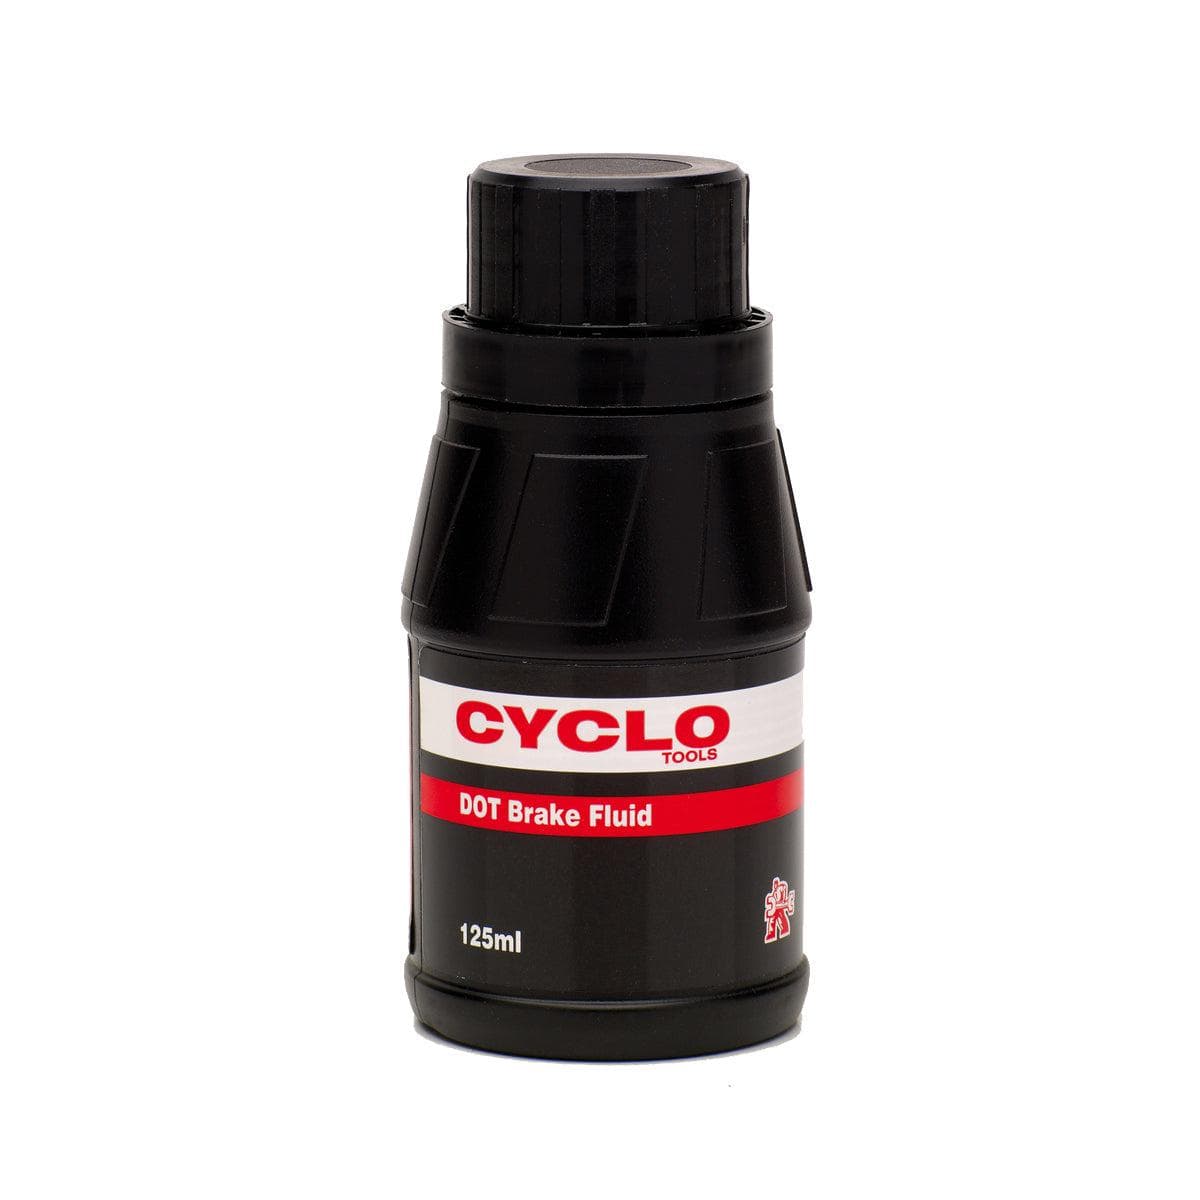 Cyclo Dot Brake Fluid (125Ml):